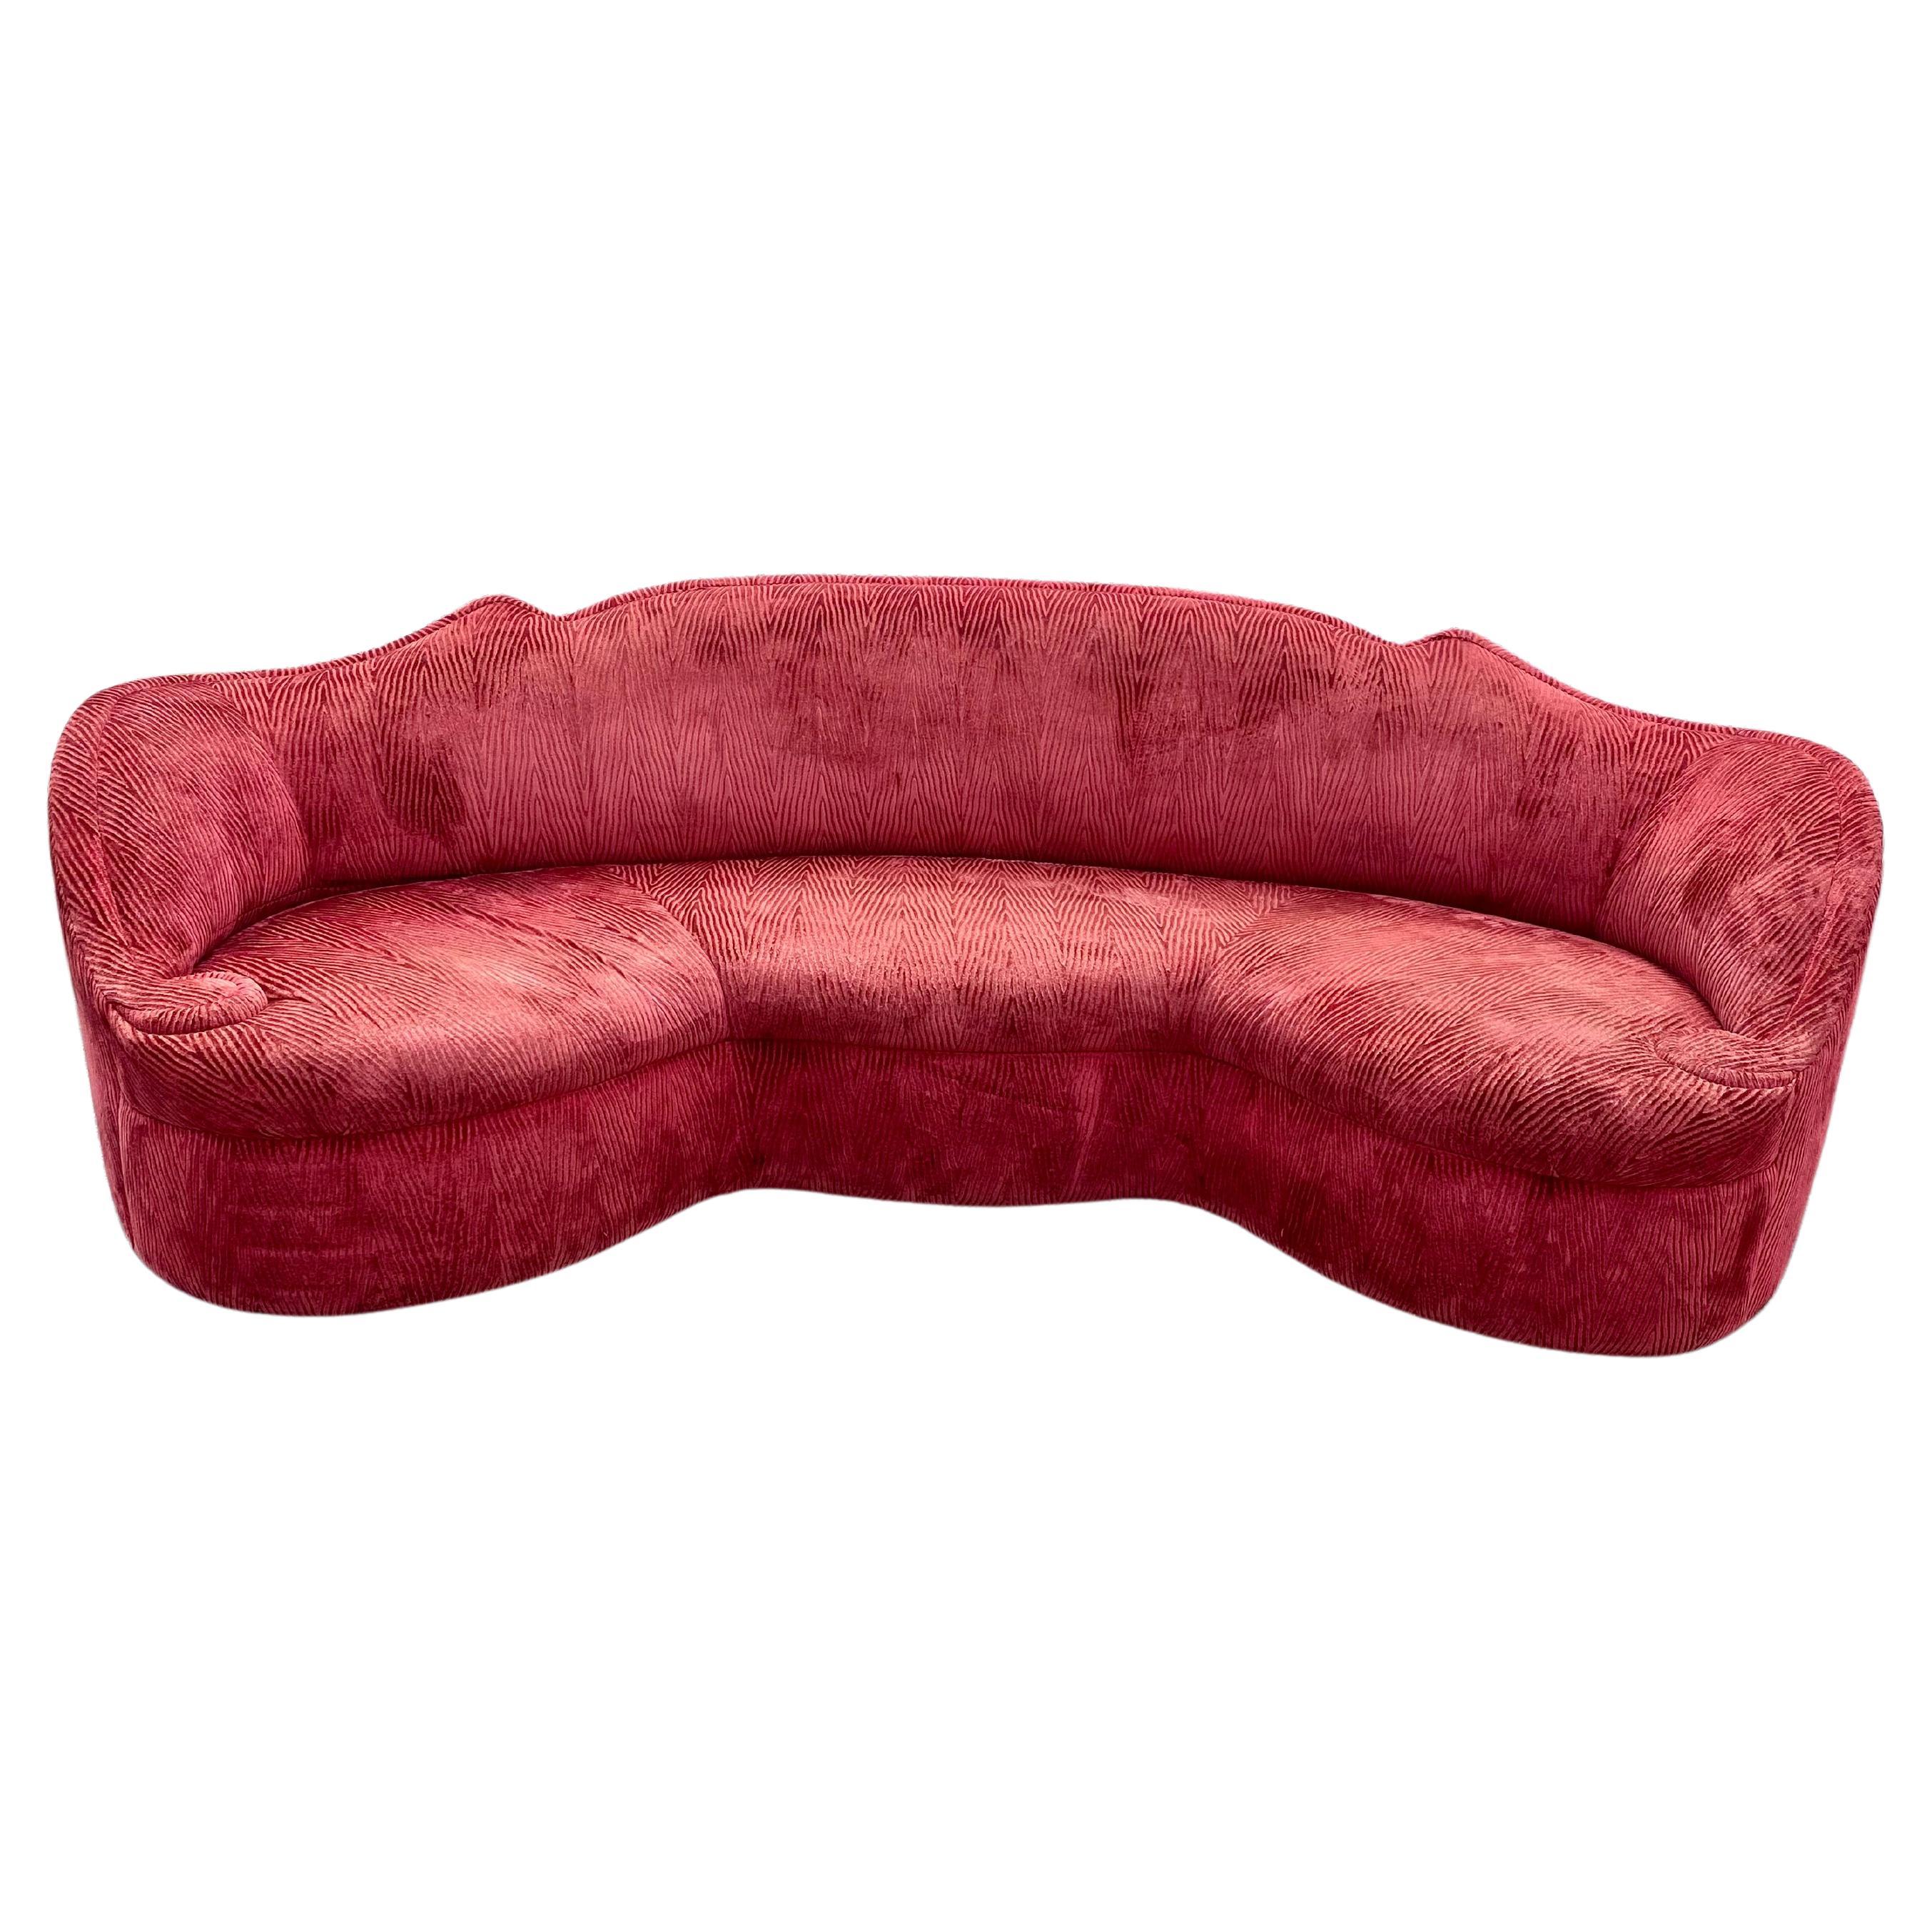 1970s Monumental Maroon Schiaparelli Velvet Curved Sofa For Sale